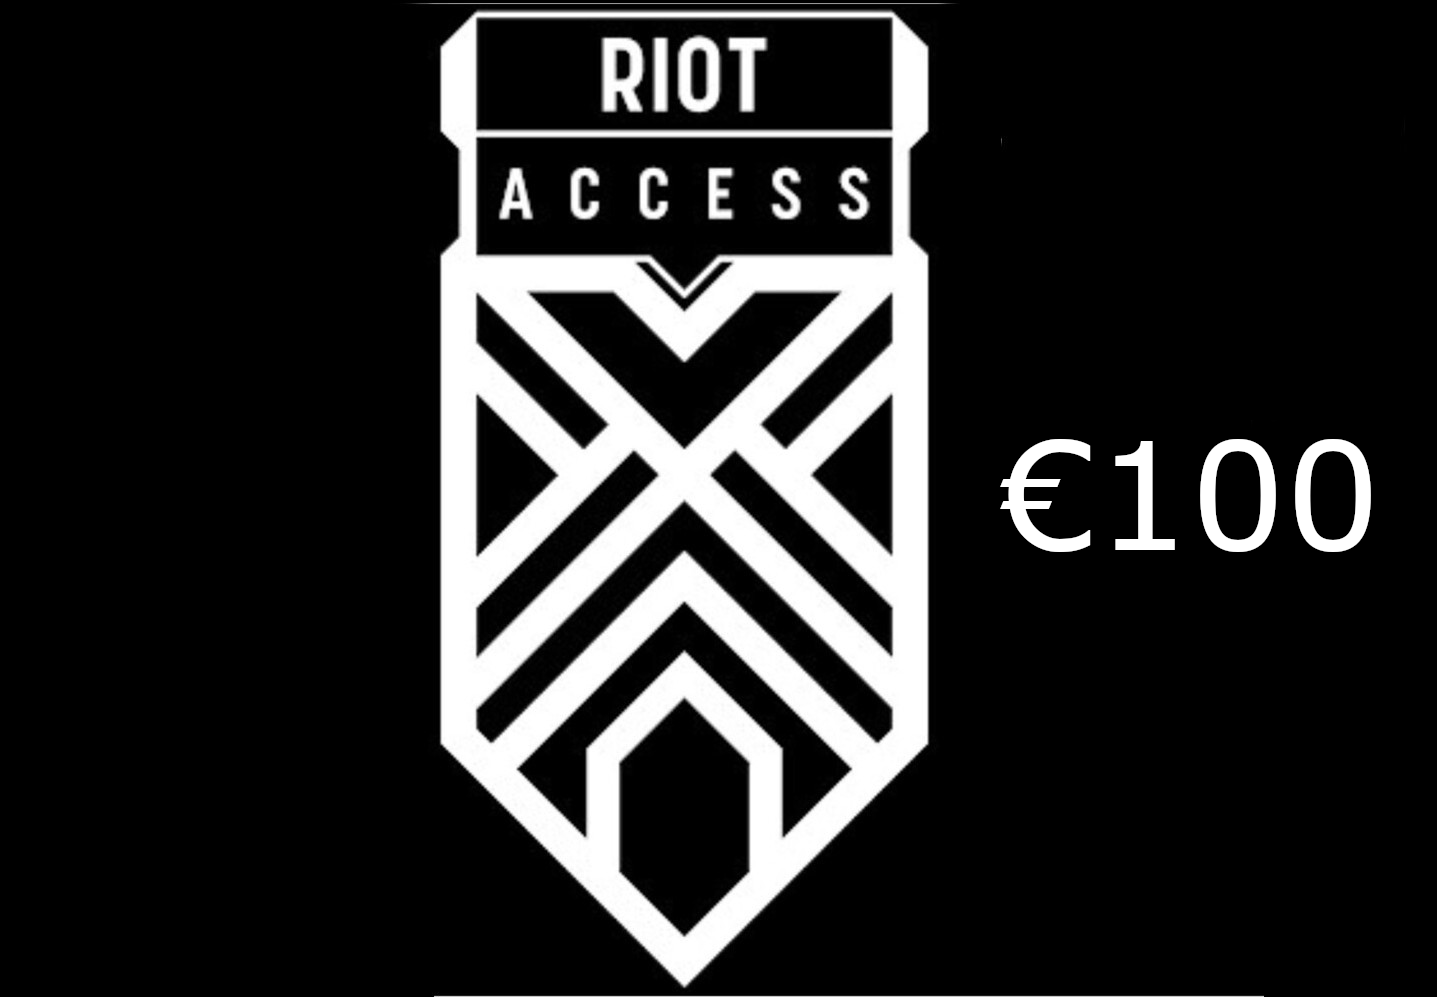 Riot Access €100 Code EU